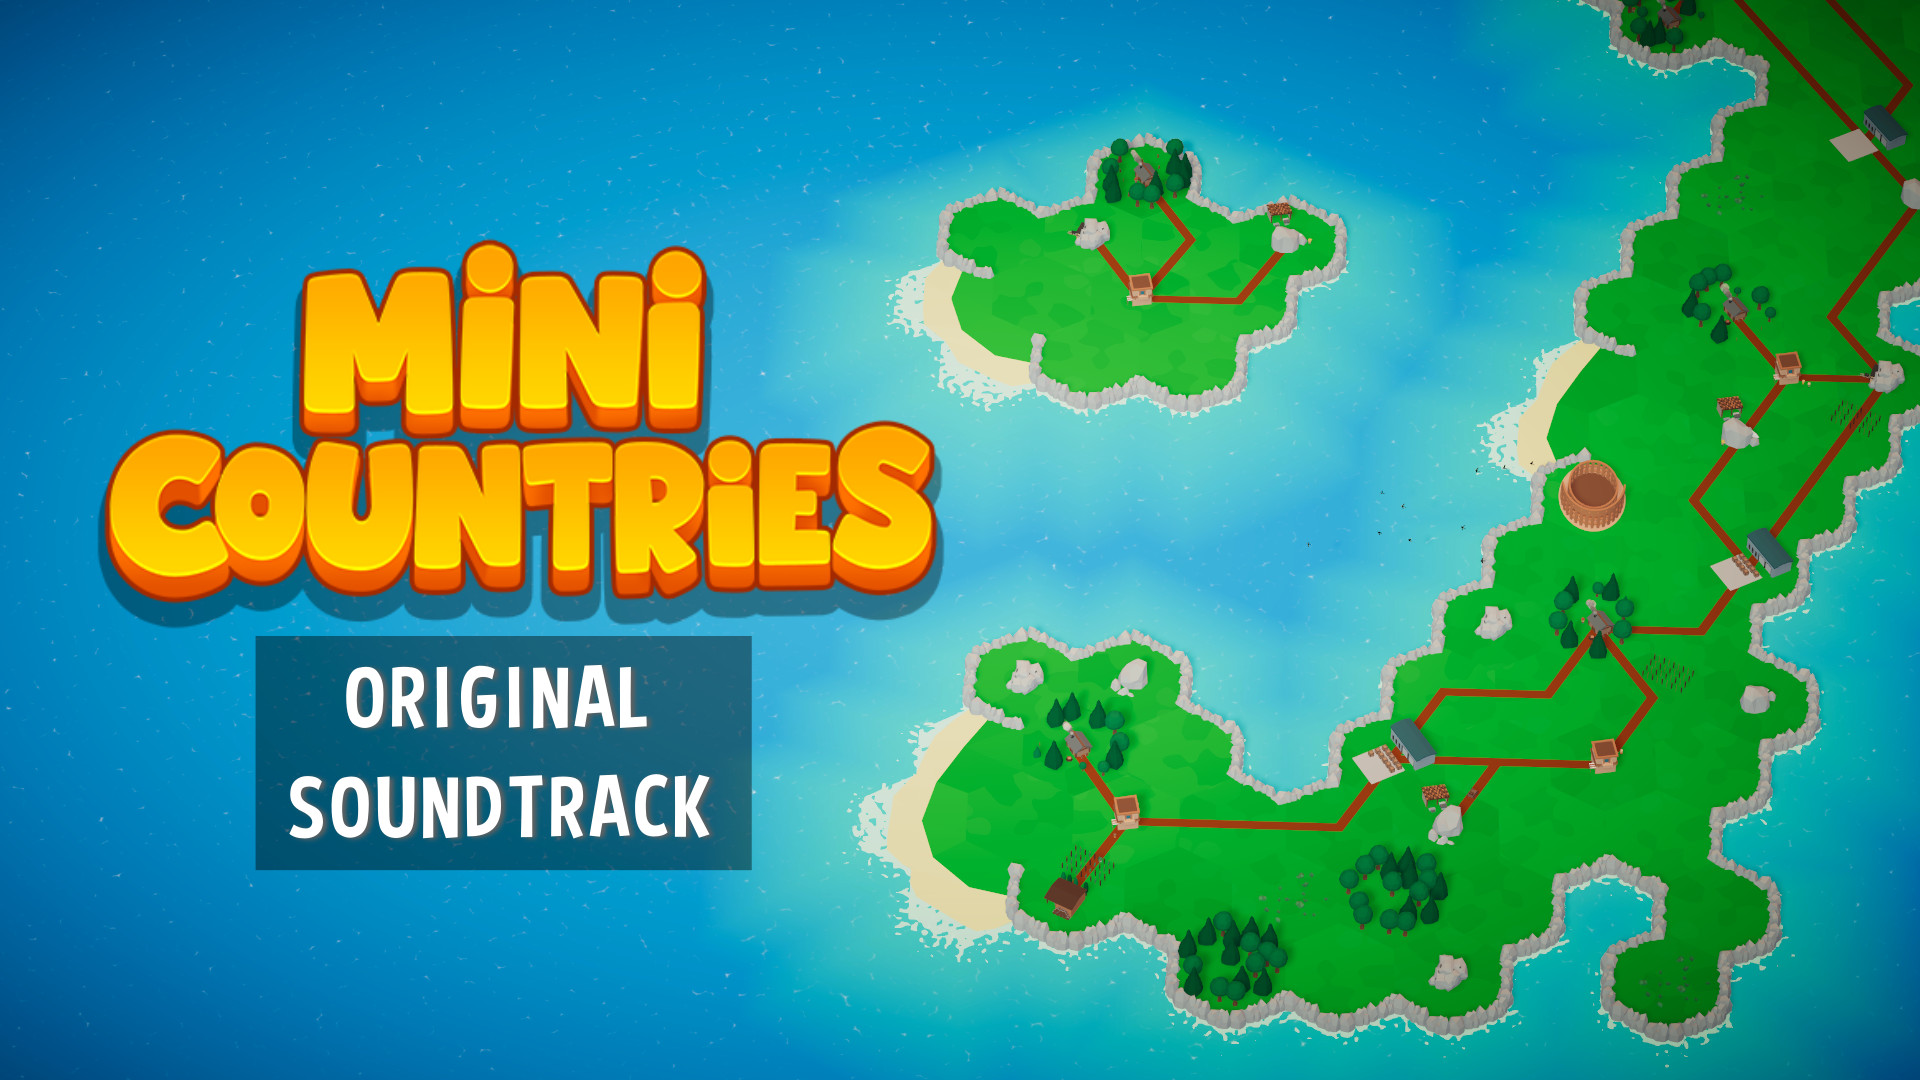 Mini Countries Soundtrack Featured Screenshot #1